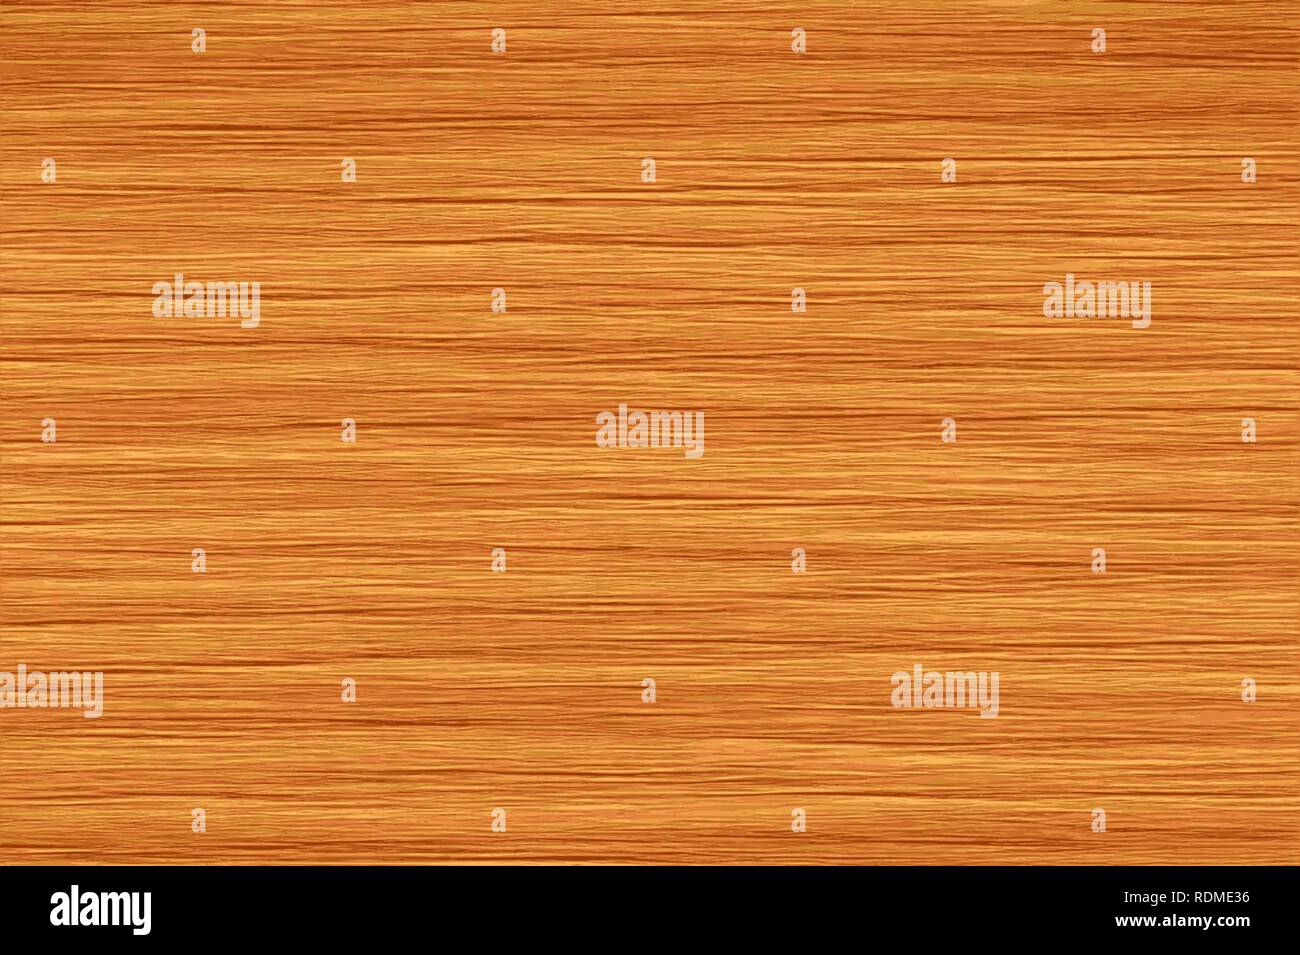 Textura ligera con líneas horizontales de color naranja para un fondo Foto de stock